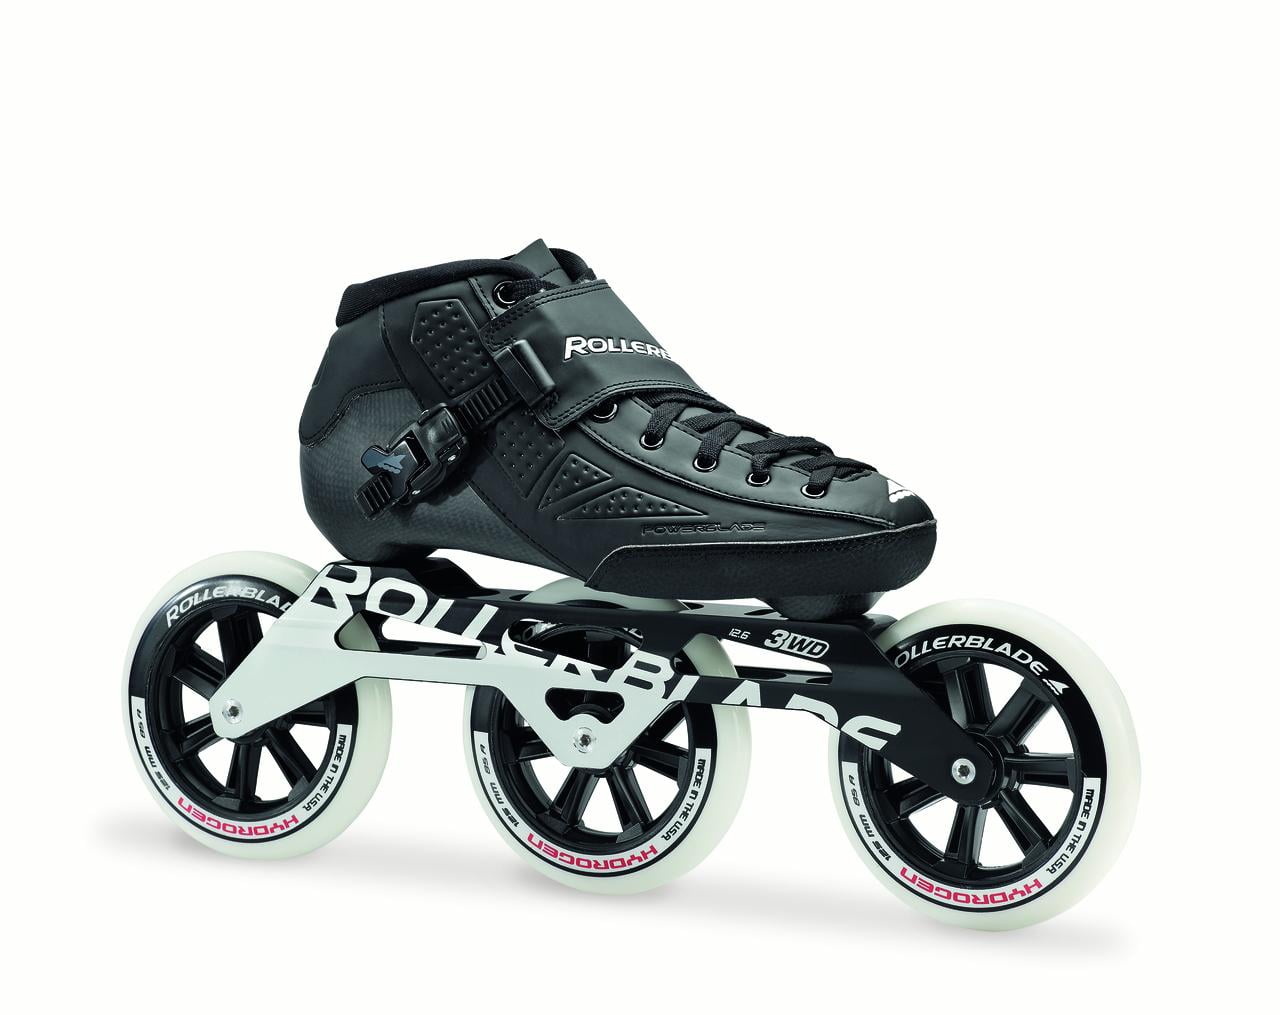 Rollerblade Endurace Pro 125 Unisex Adult Fitness Inline Skate Black and Red Premium Inline Skates